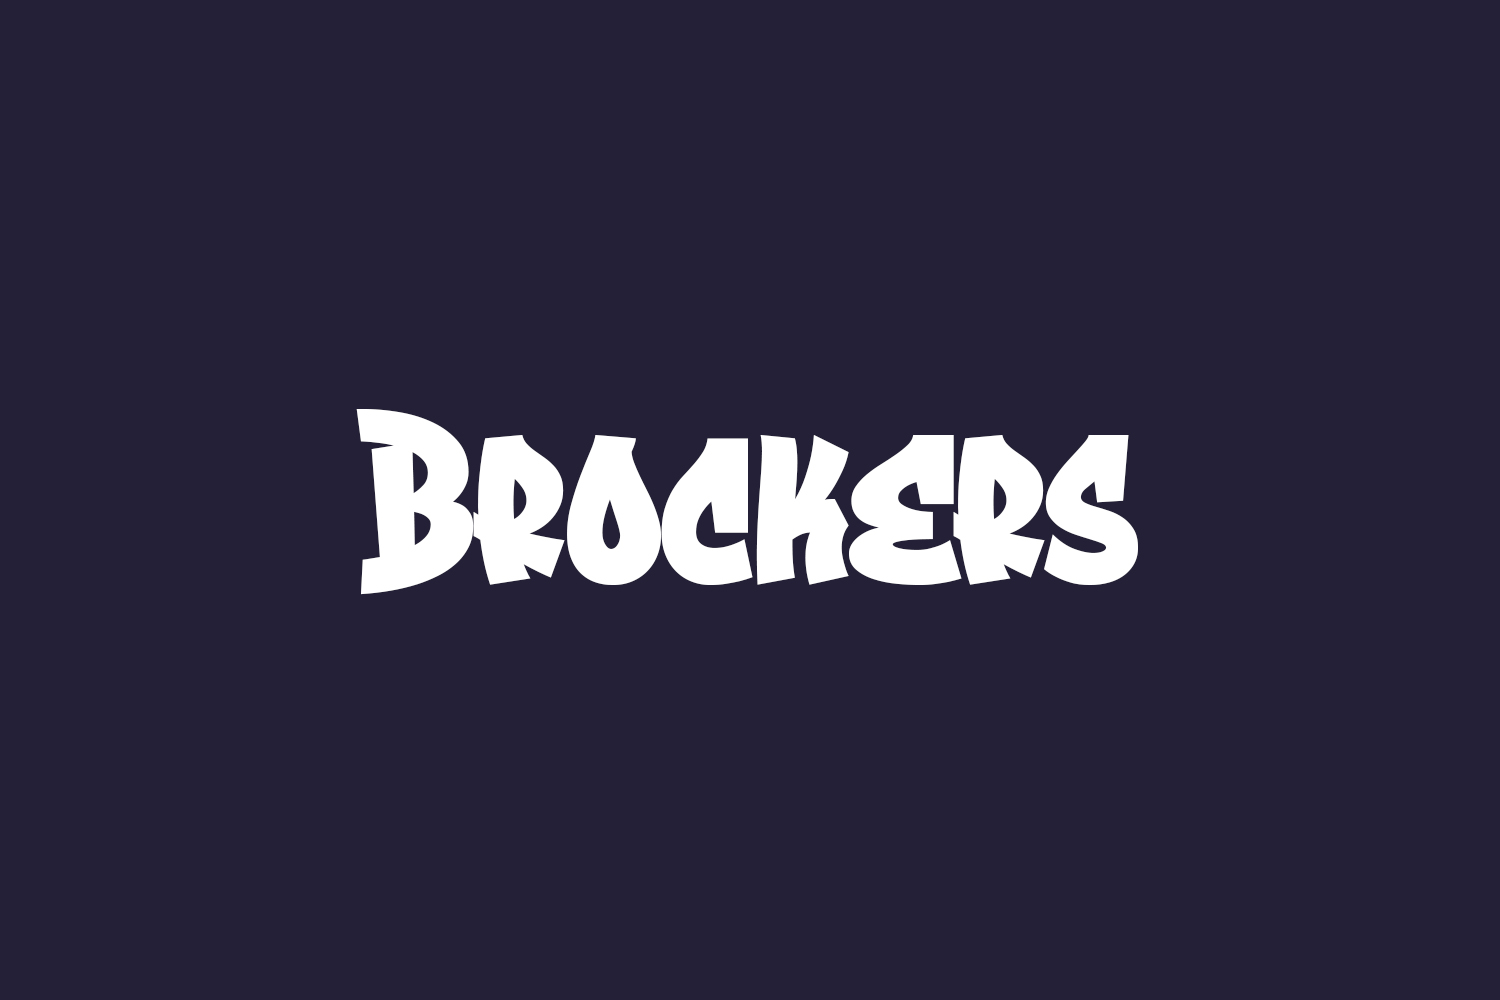 Brockers Free Font